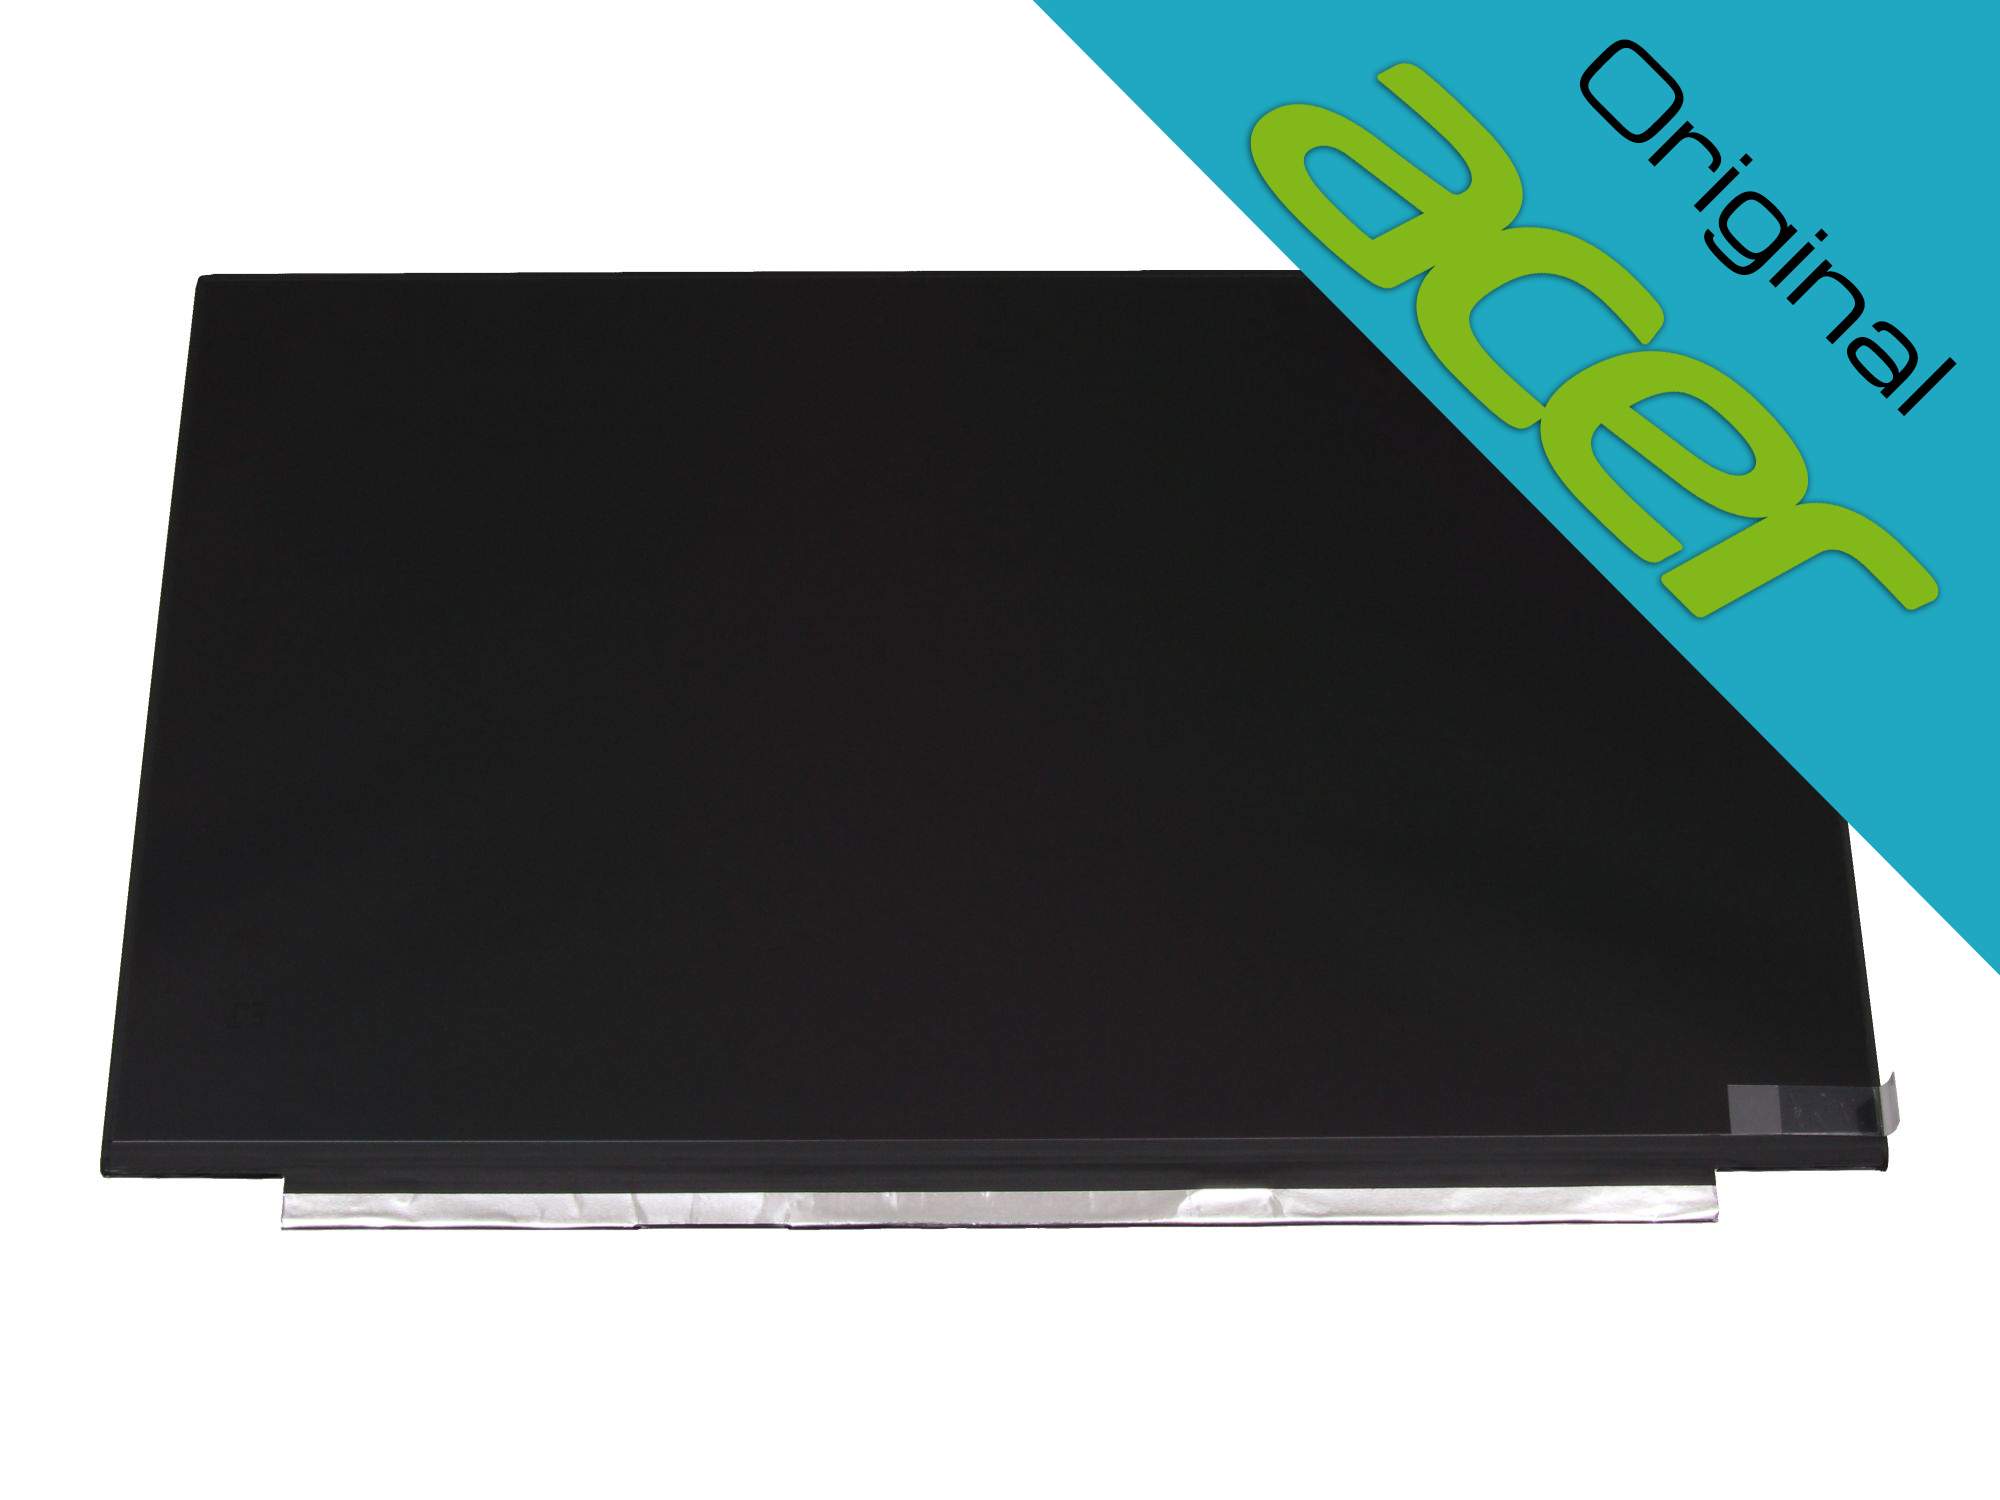 ACER LCD PANEL 15 6' FHD NON-GLARE